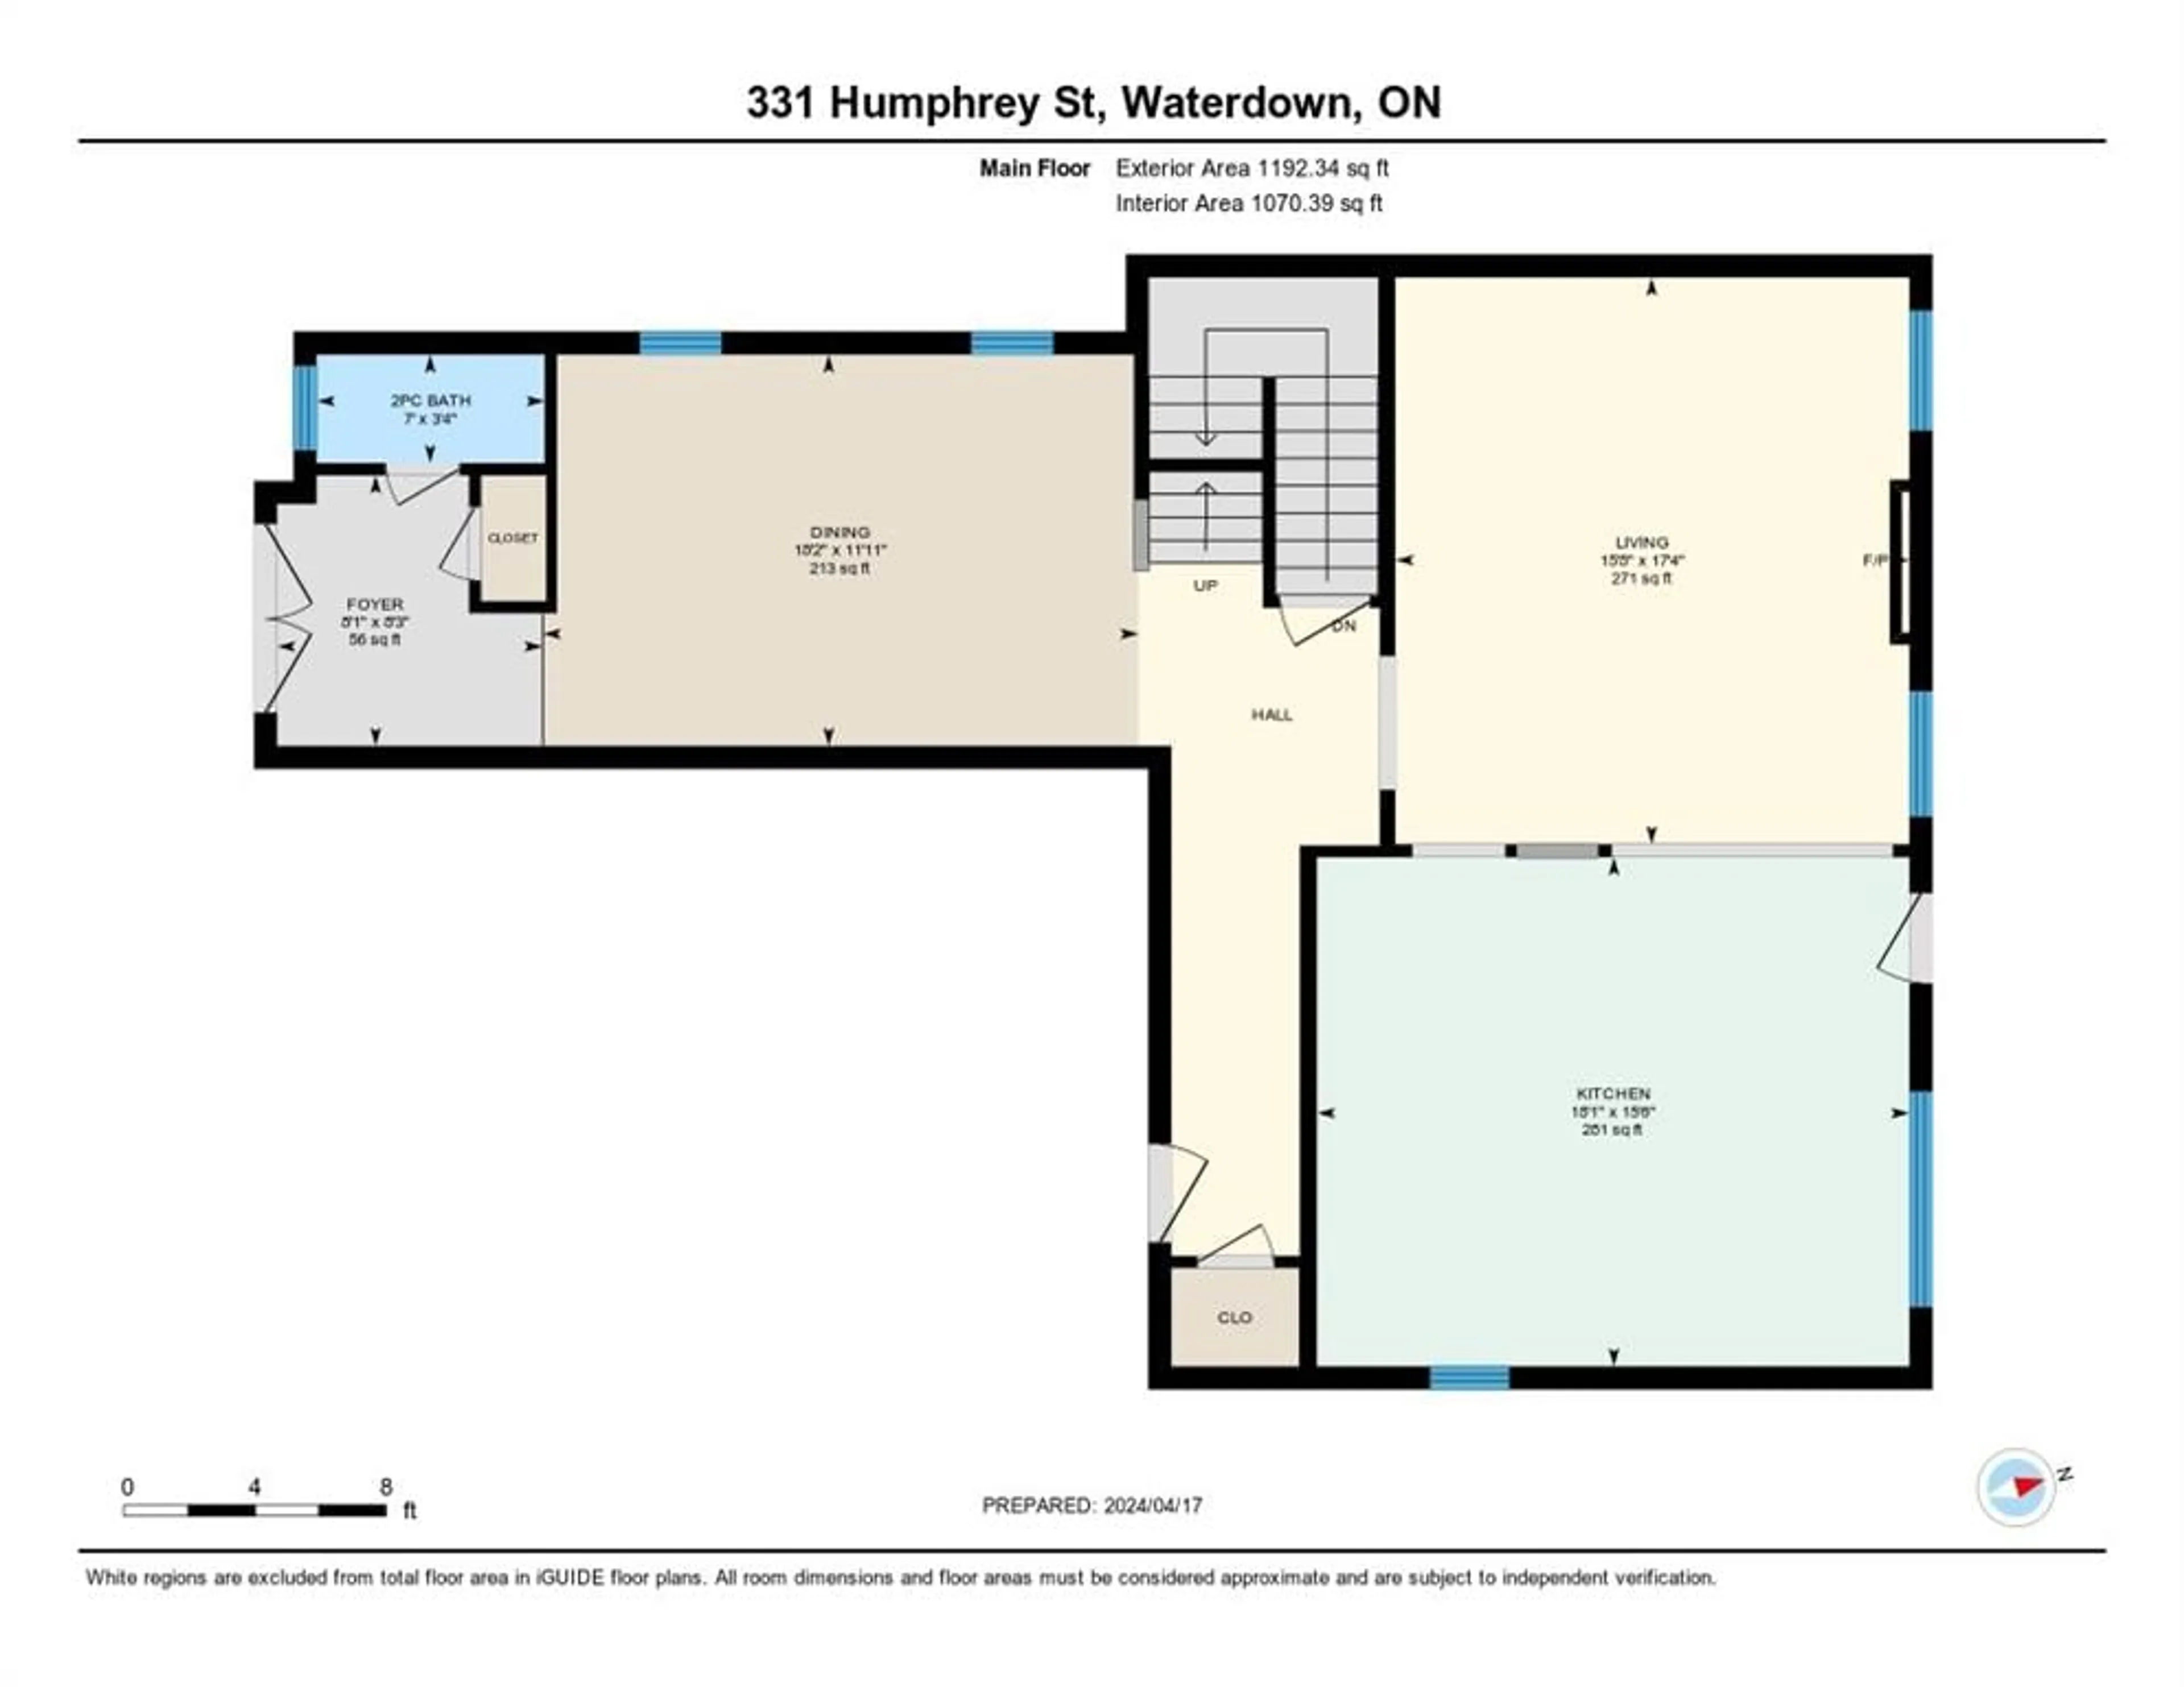 Floor plan for 331 Humphrey St, Waterdown Ontario L8B 1X5